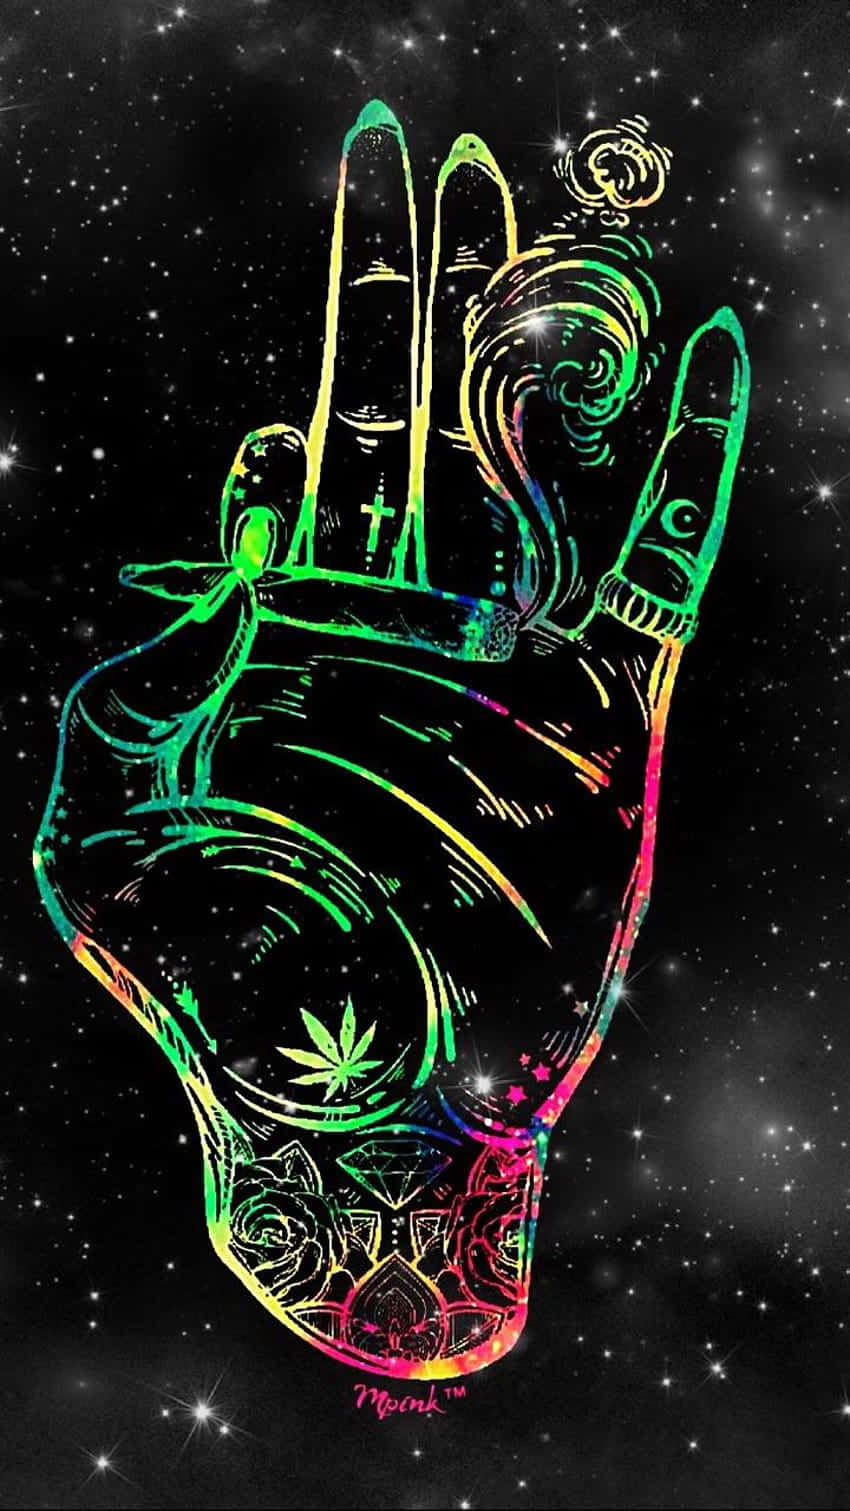 En hånd med et marihuana-blad i det. Wallpaper